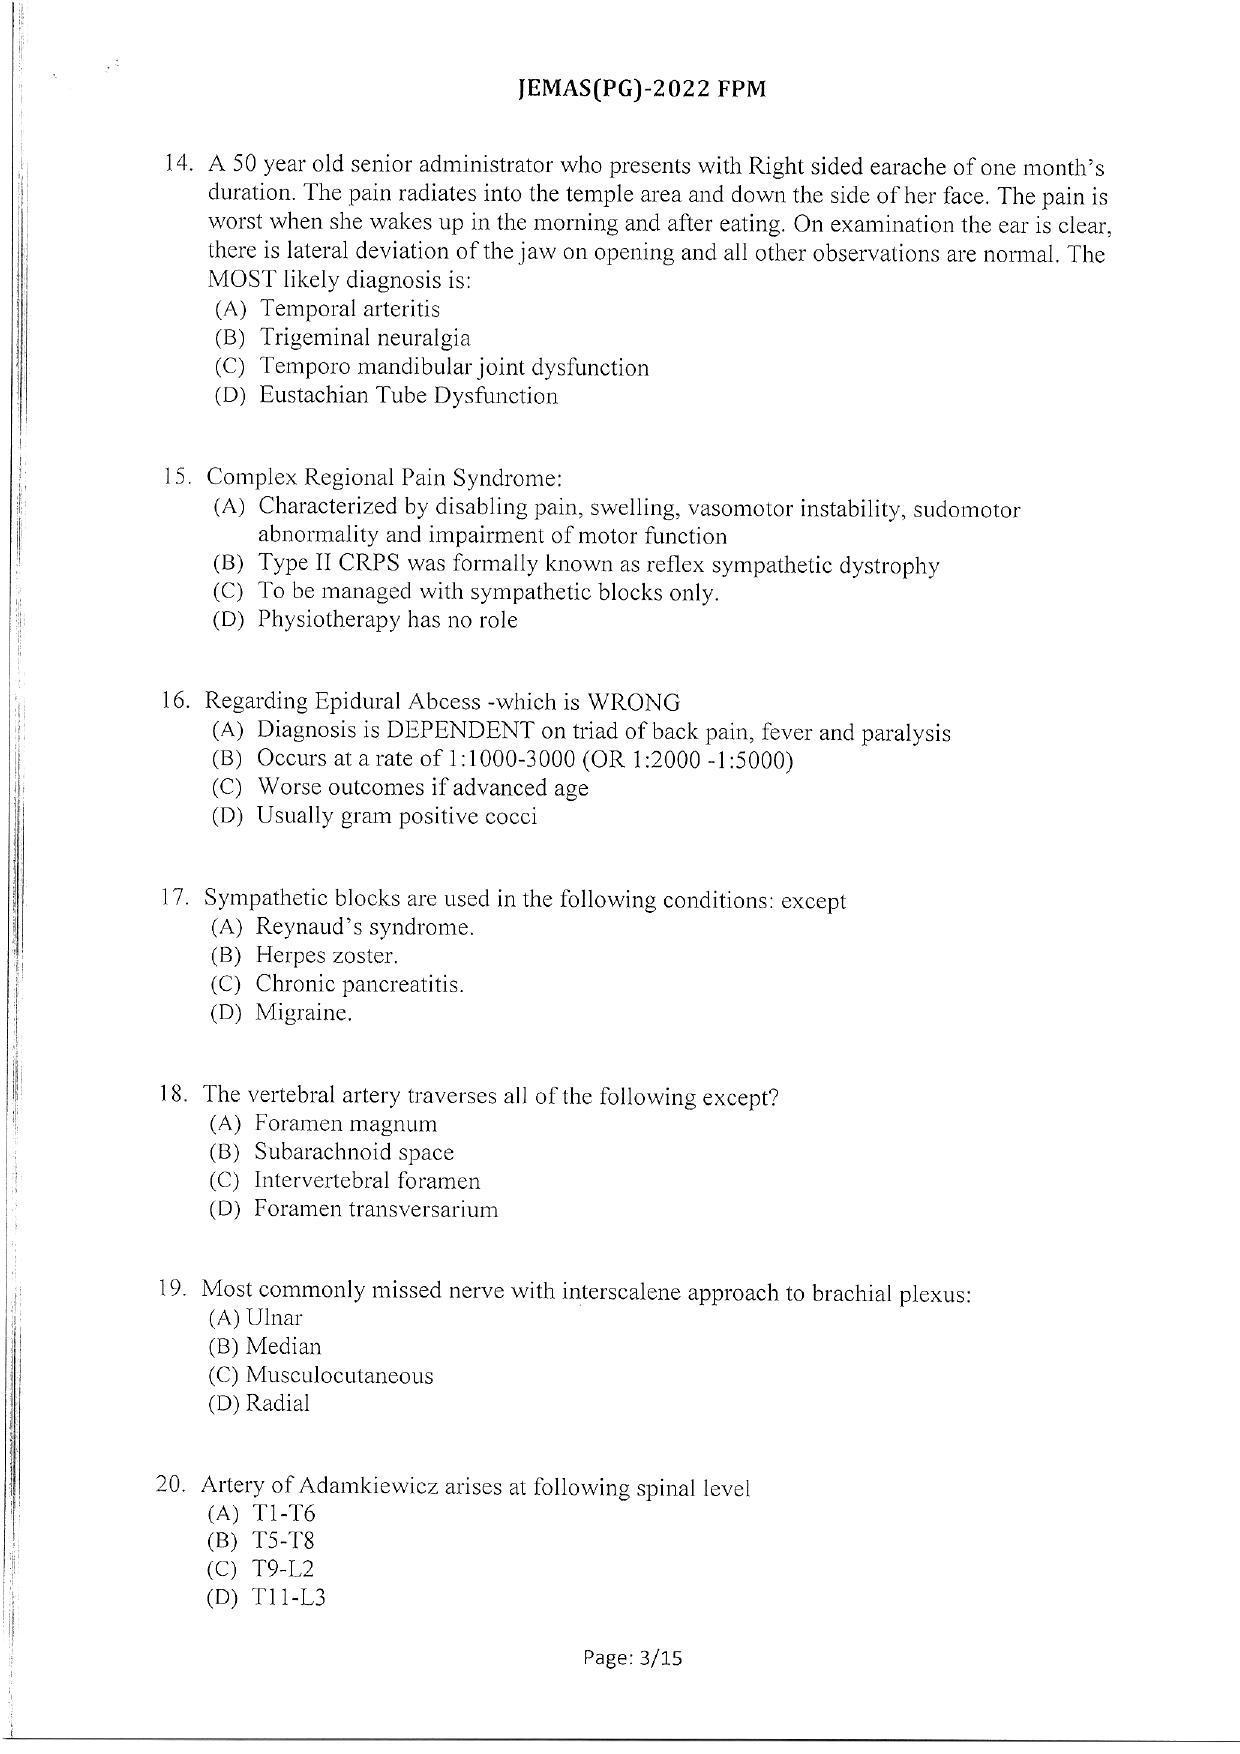 WBJEEB JEMAS (PG) 2022 FPM Question Paper - Page 5